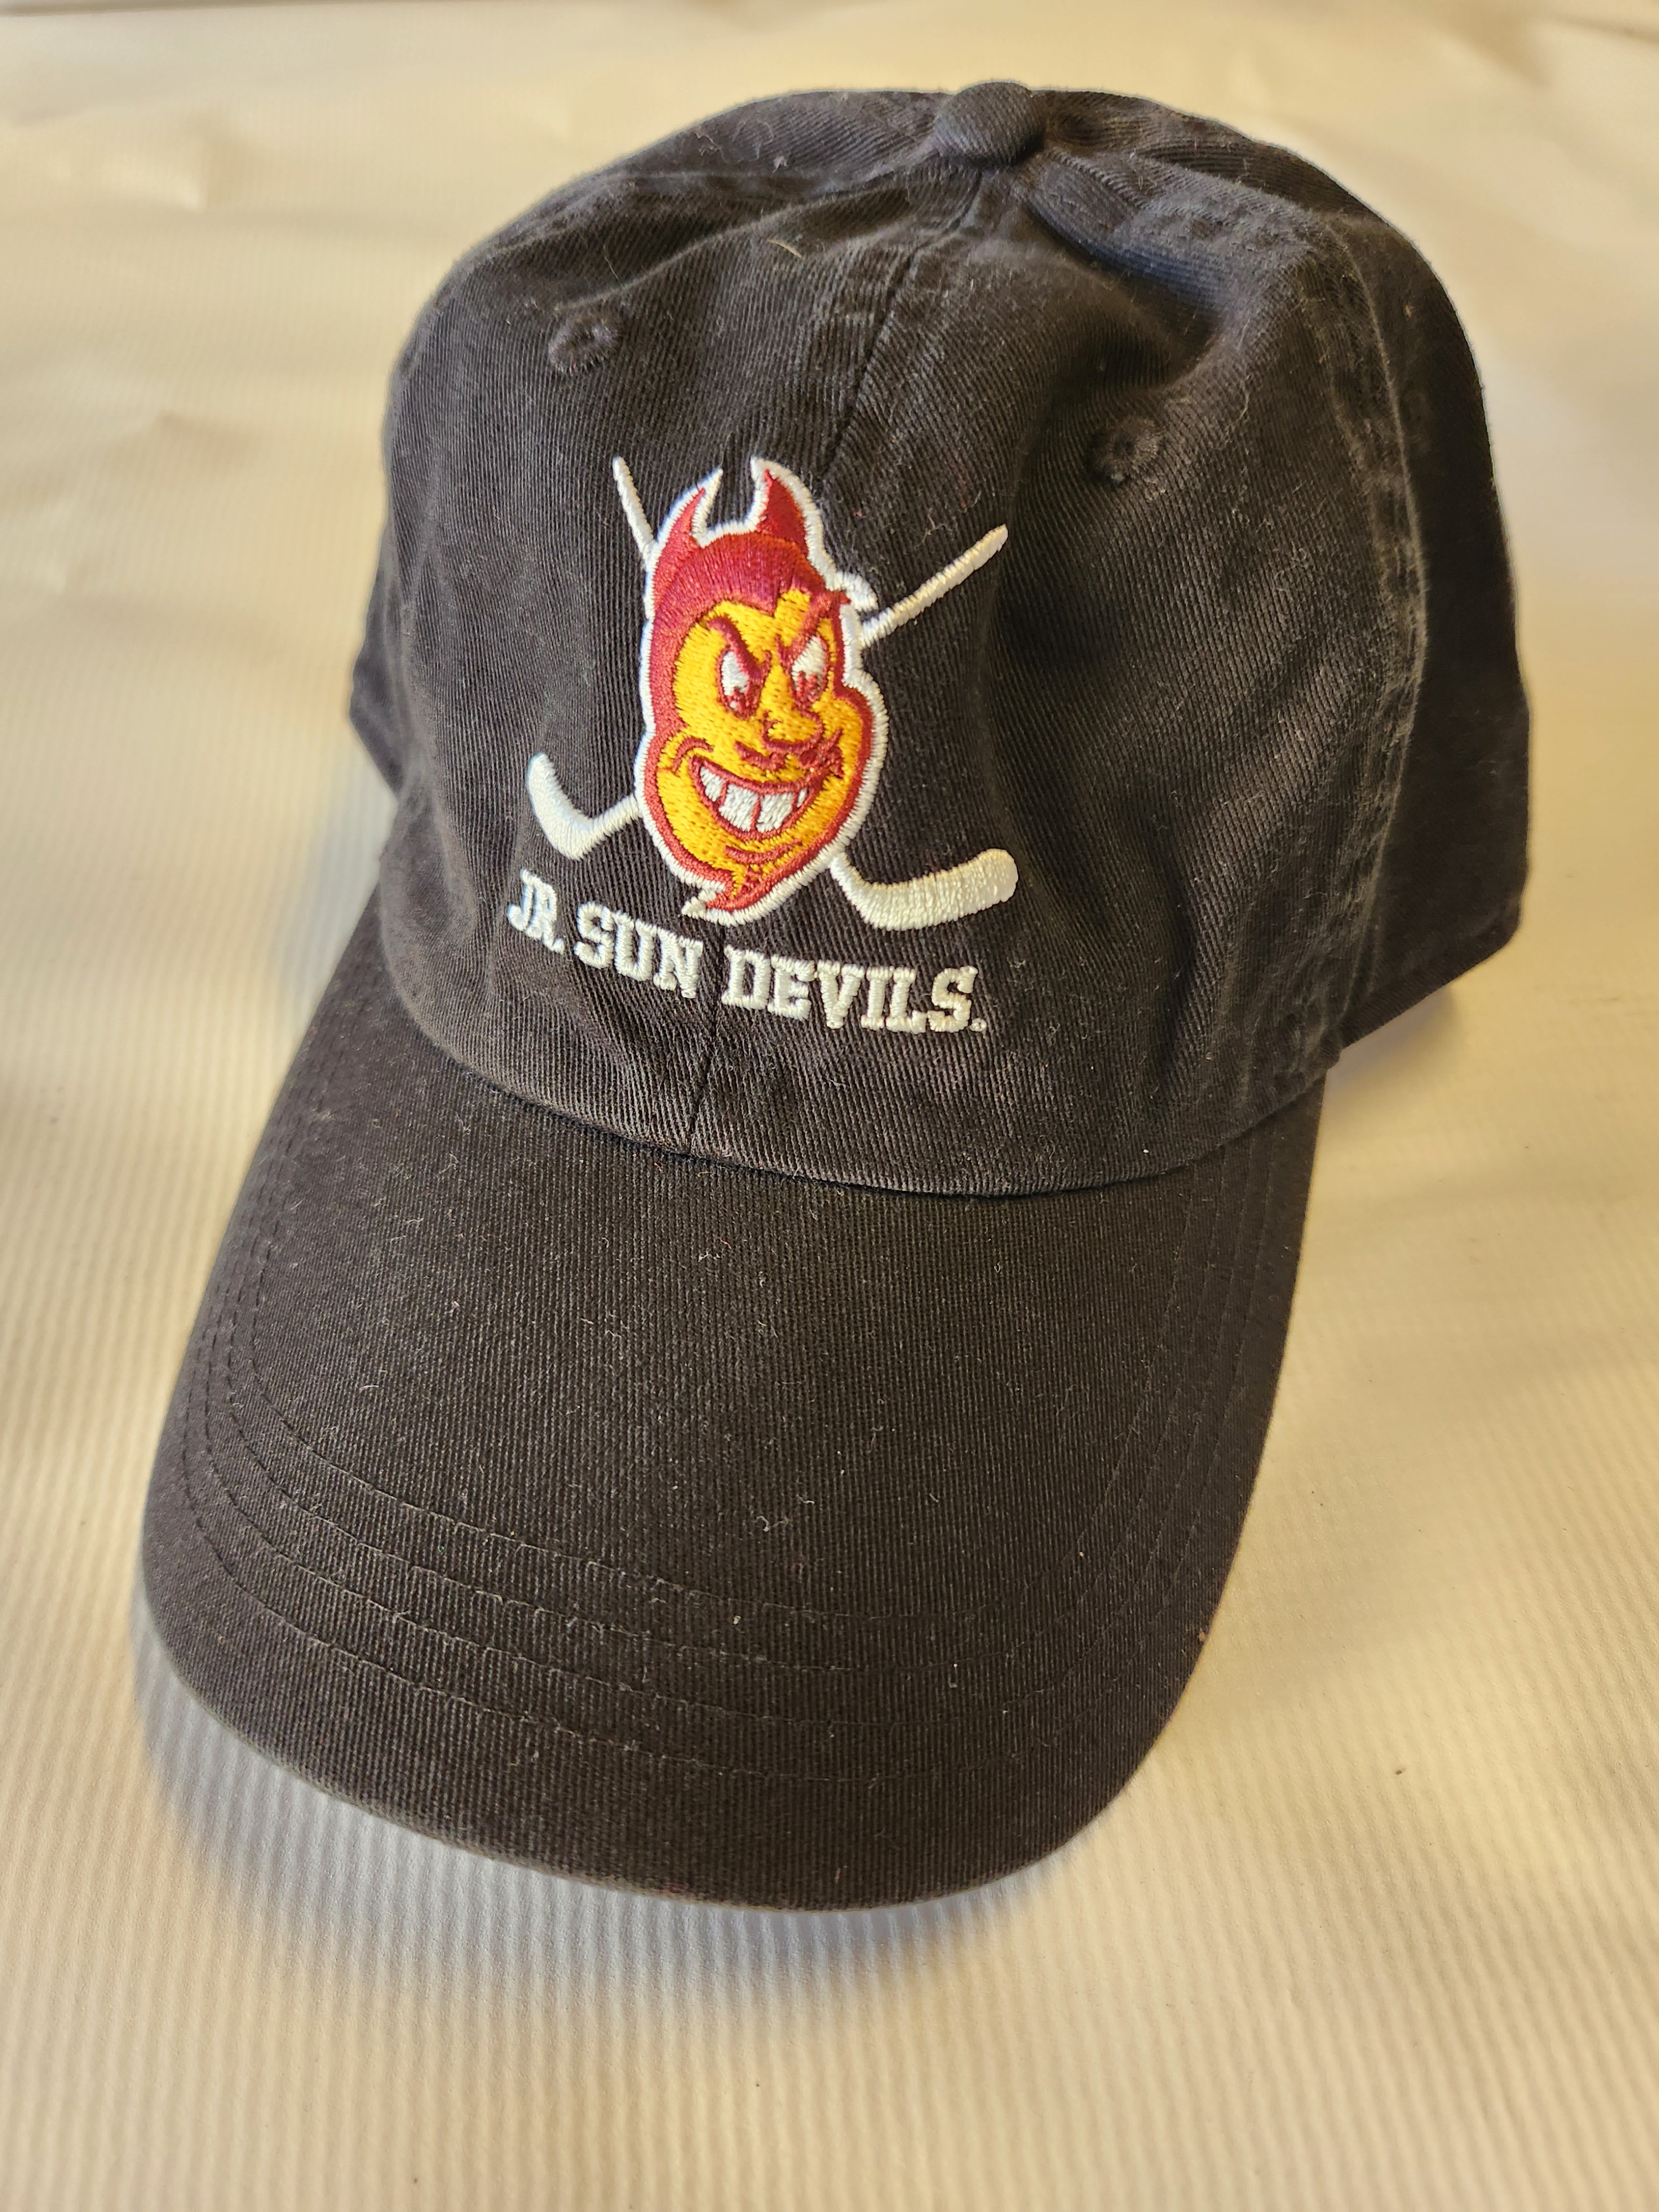 MLB American Needle Montreal Expos Two Tone Fusion Blue Snapback Flat Hat  Cap - Sinbad Sports Store